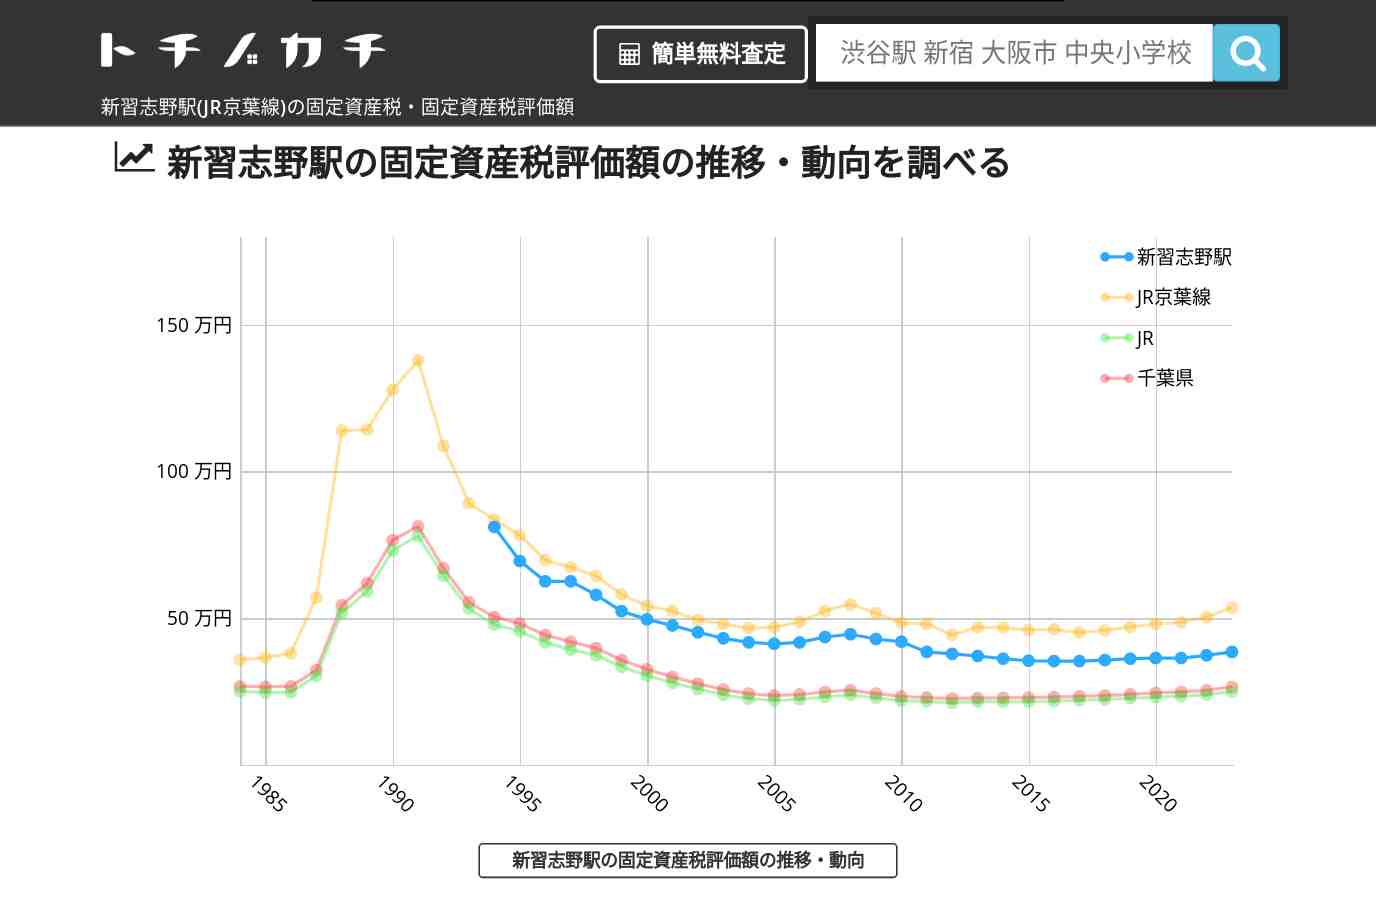 新習志野駅(JR京葉線)の固定資産税・固定資産税評価額 | トチノカチ